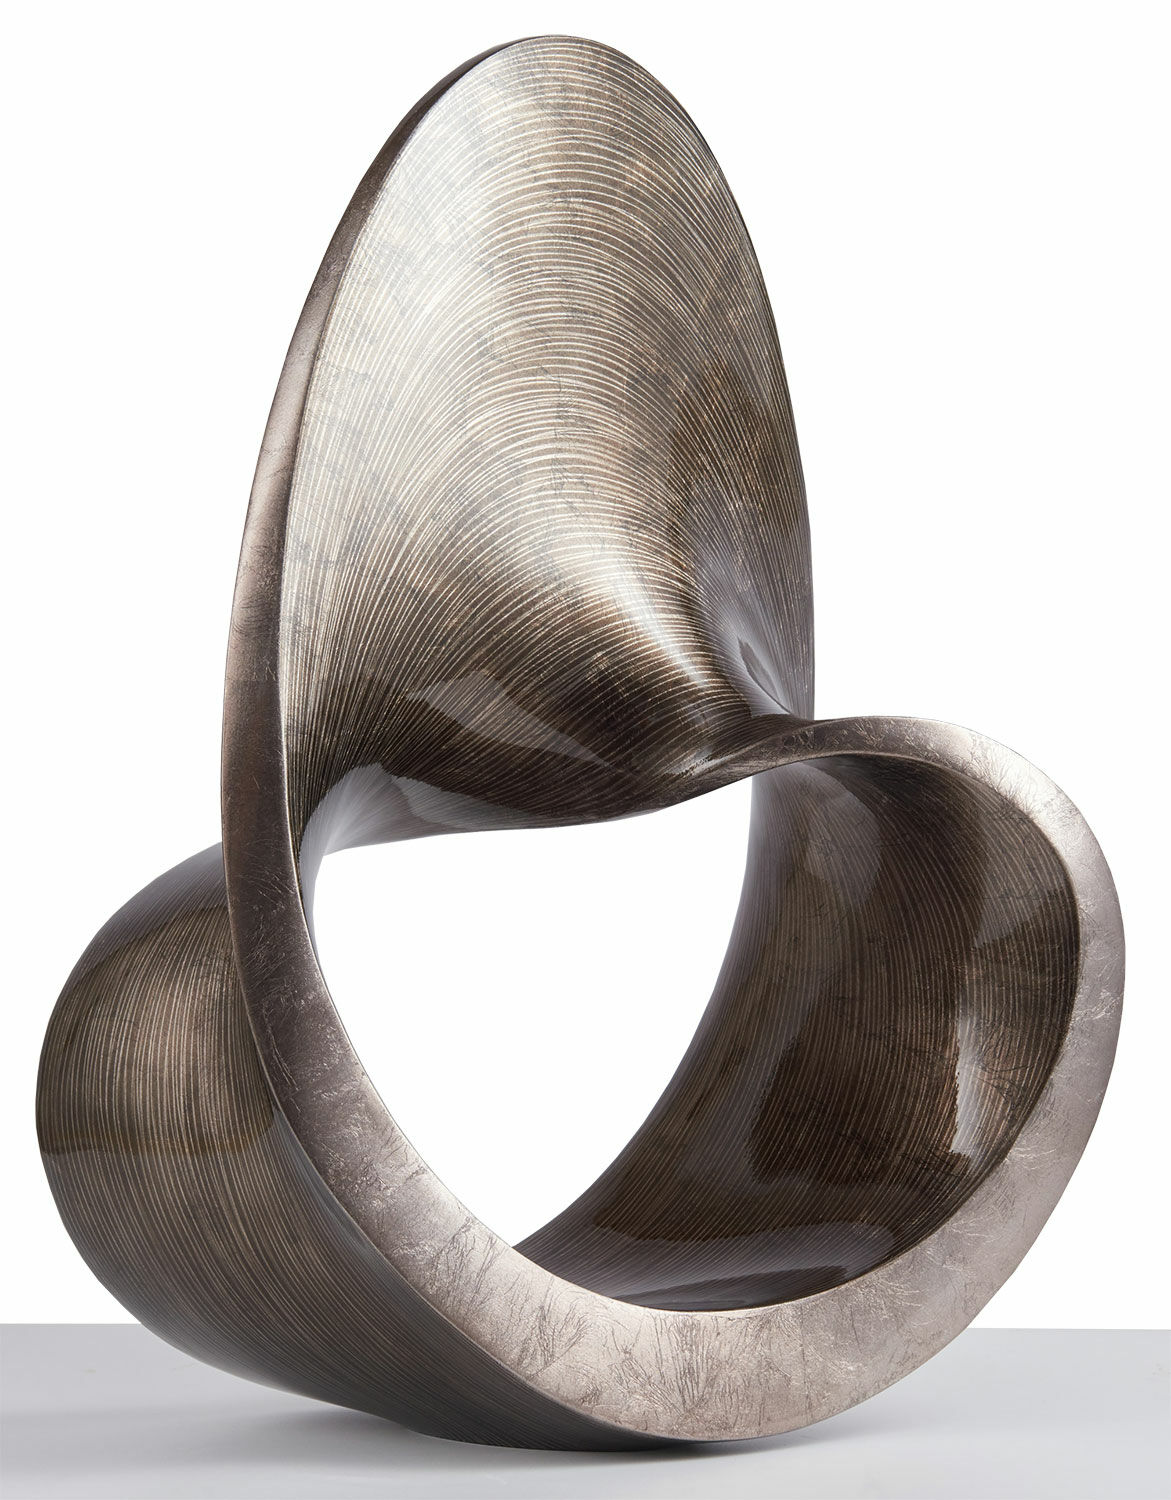 Skulptur "Spiral", støbt